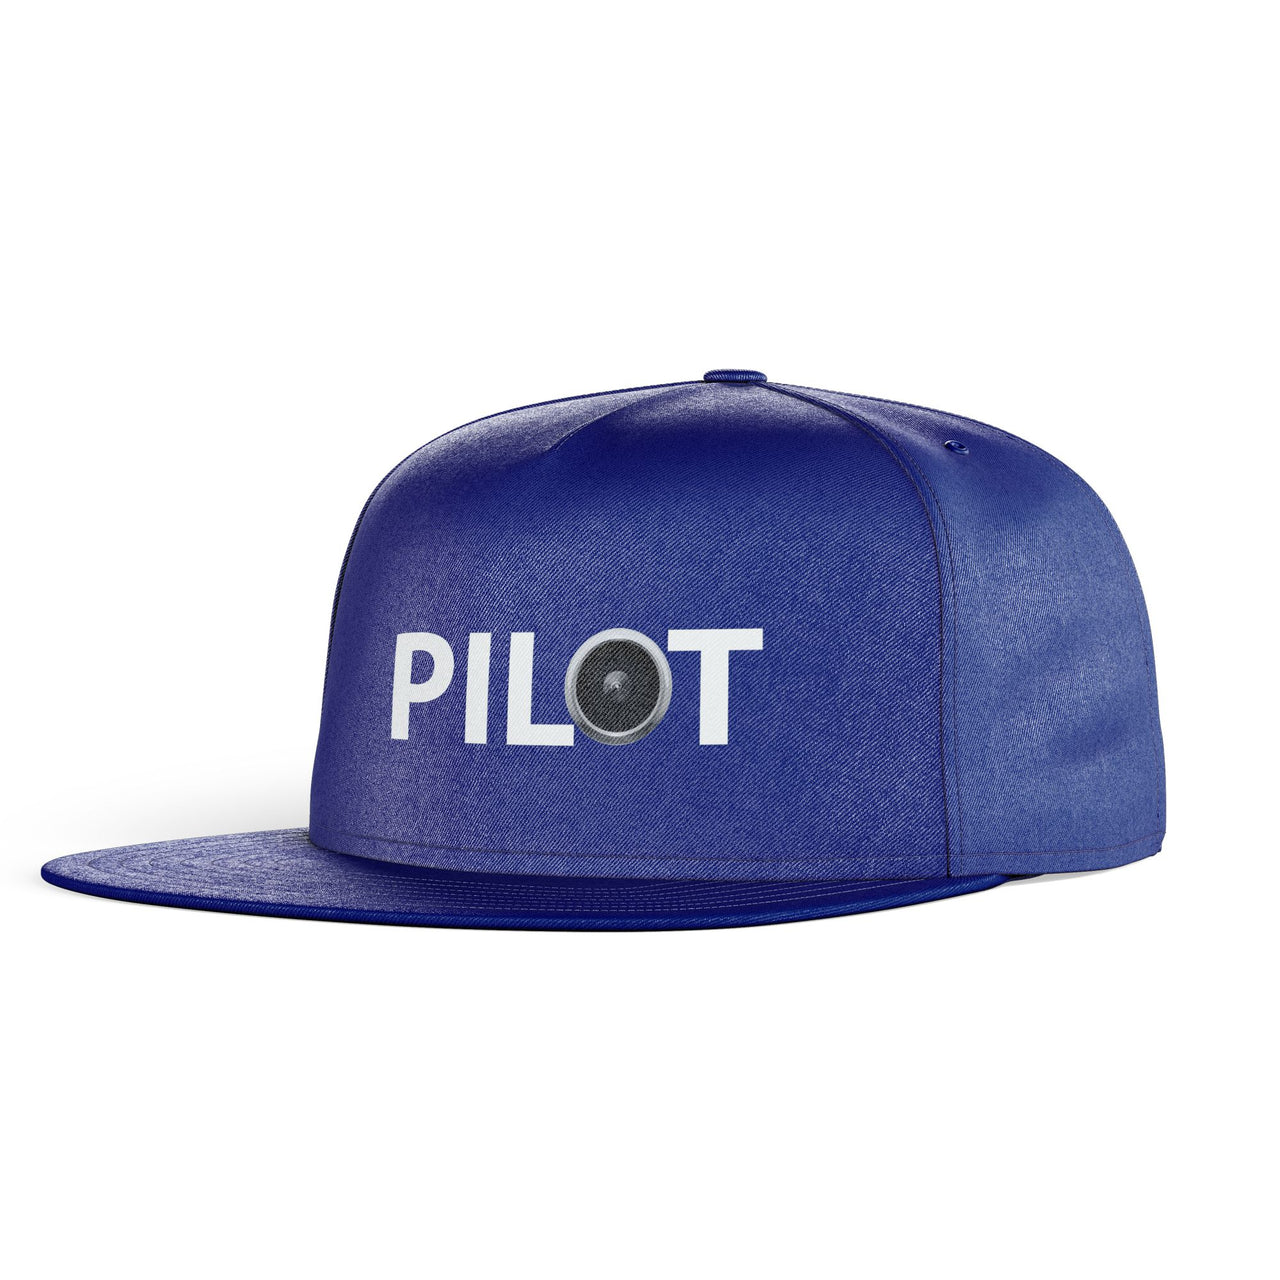 Pilot & Jet Engine Designed Snapback Caps & Hats